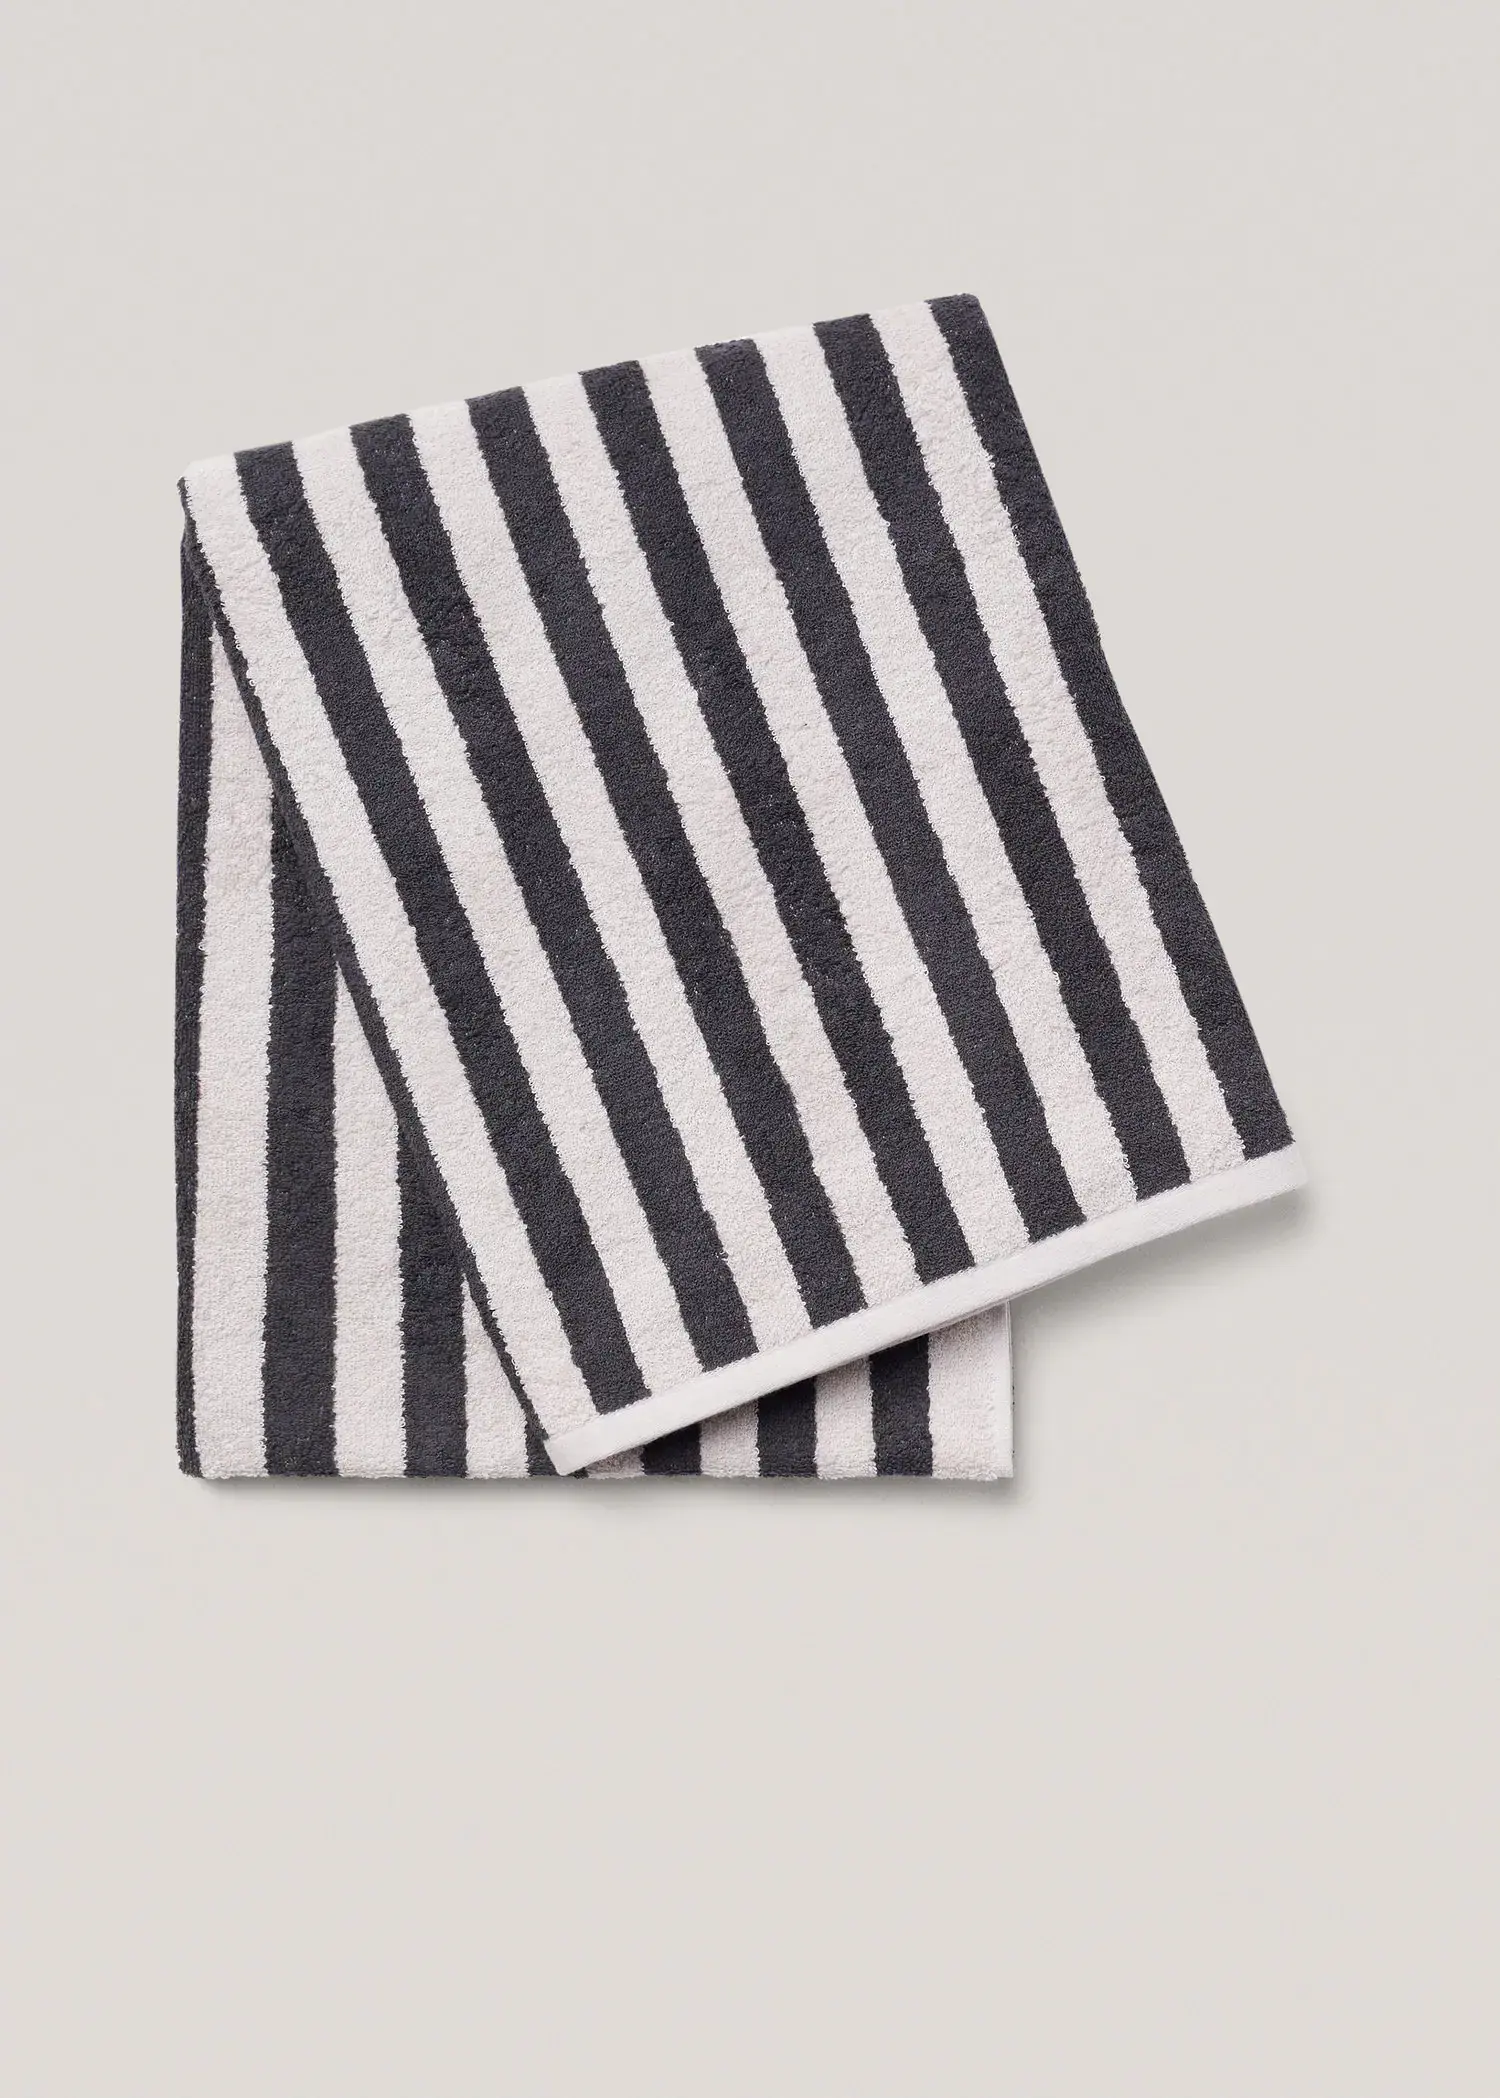 Mango 100% cotton striped beach towel 100x180cm. 1